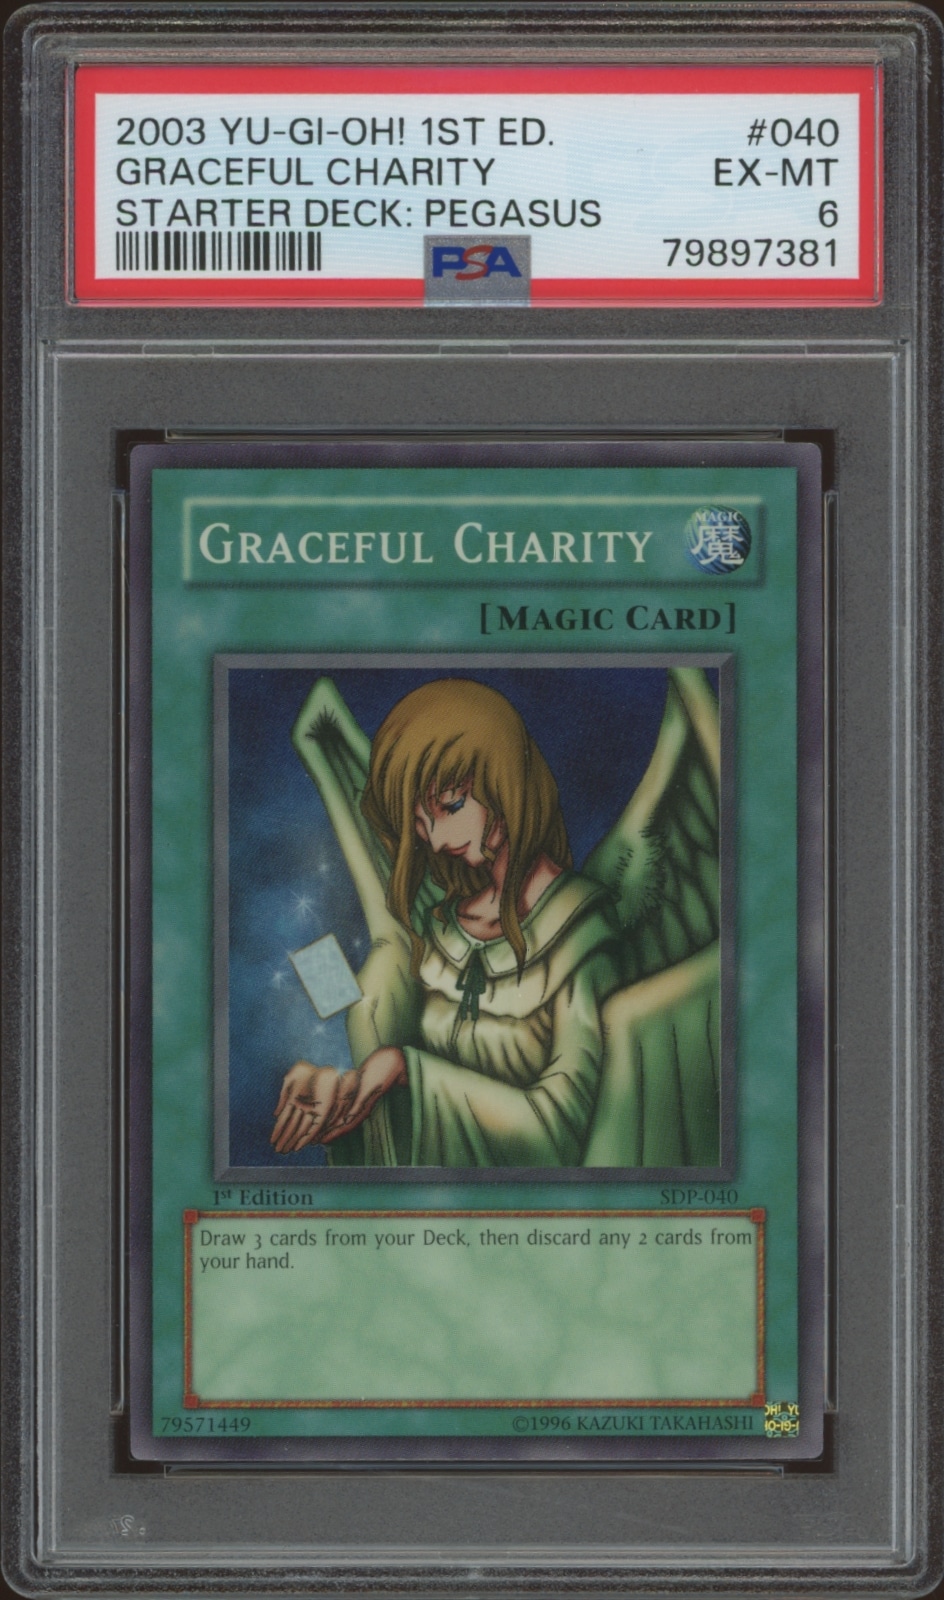 2003 Yu-Gi-Oh! Graceful Charity card, Starter Deck: Pegasus, 1st Edition, graded EX-MT 6.